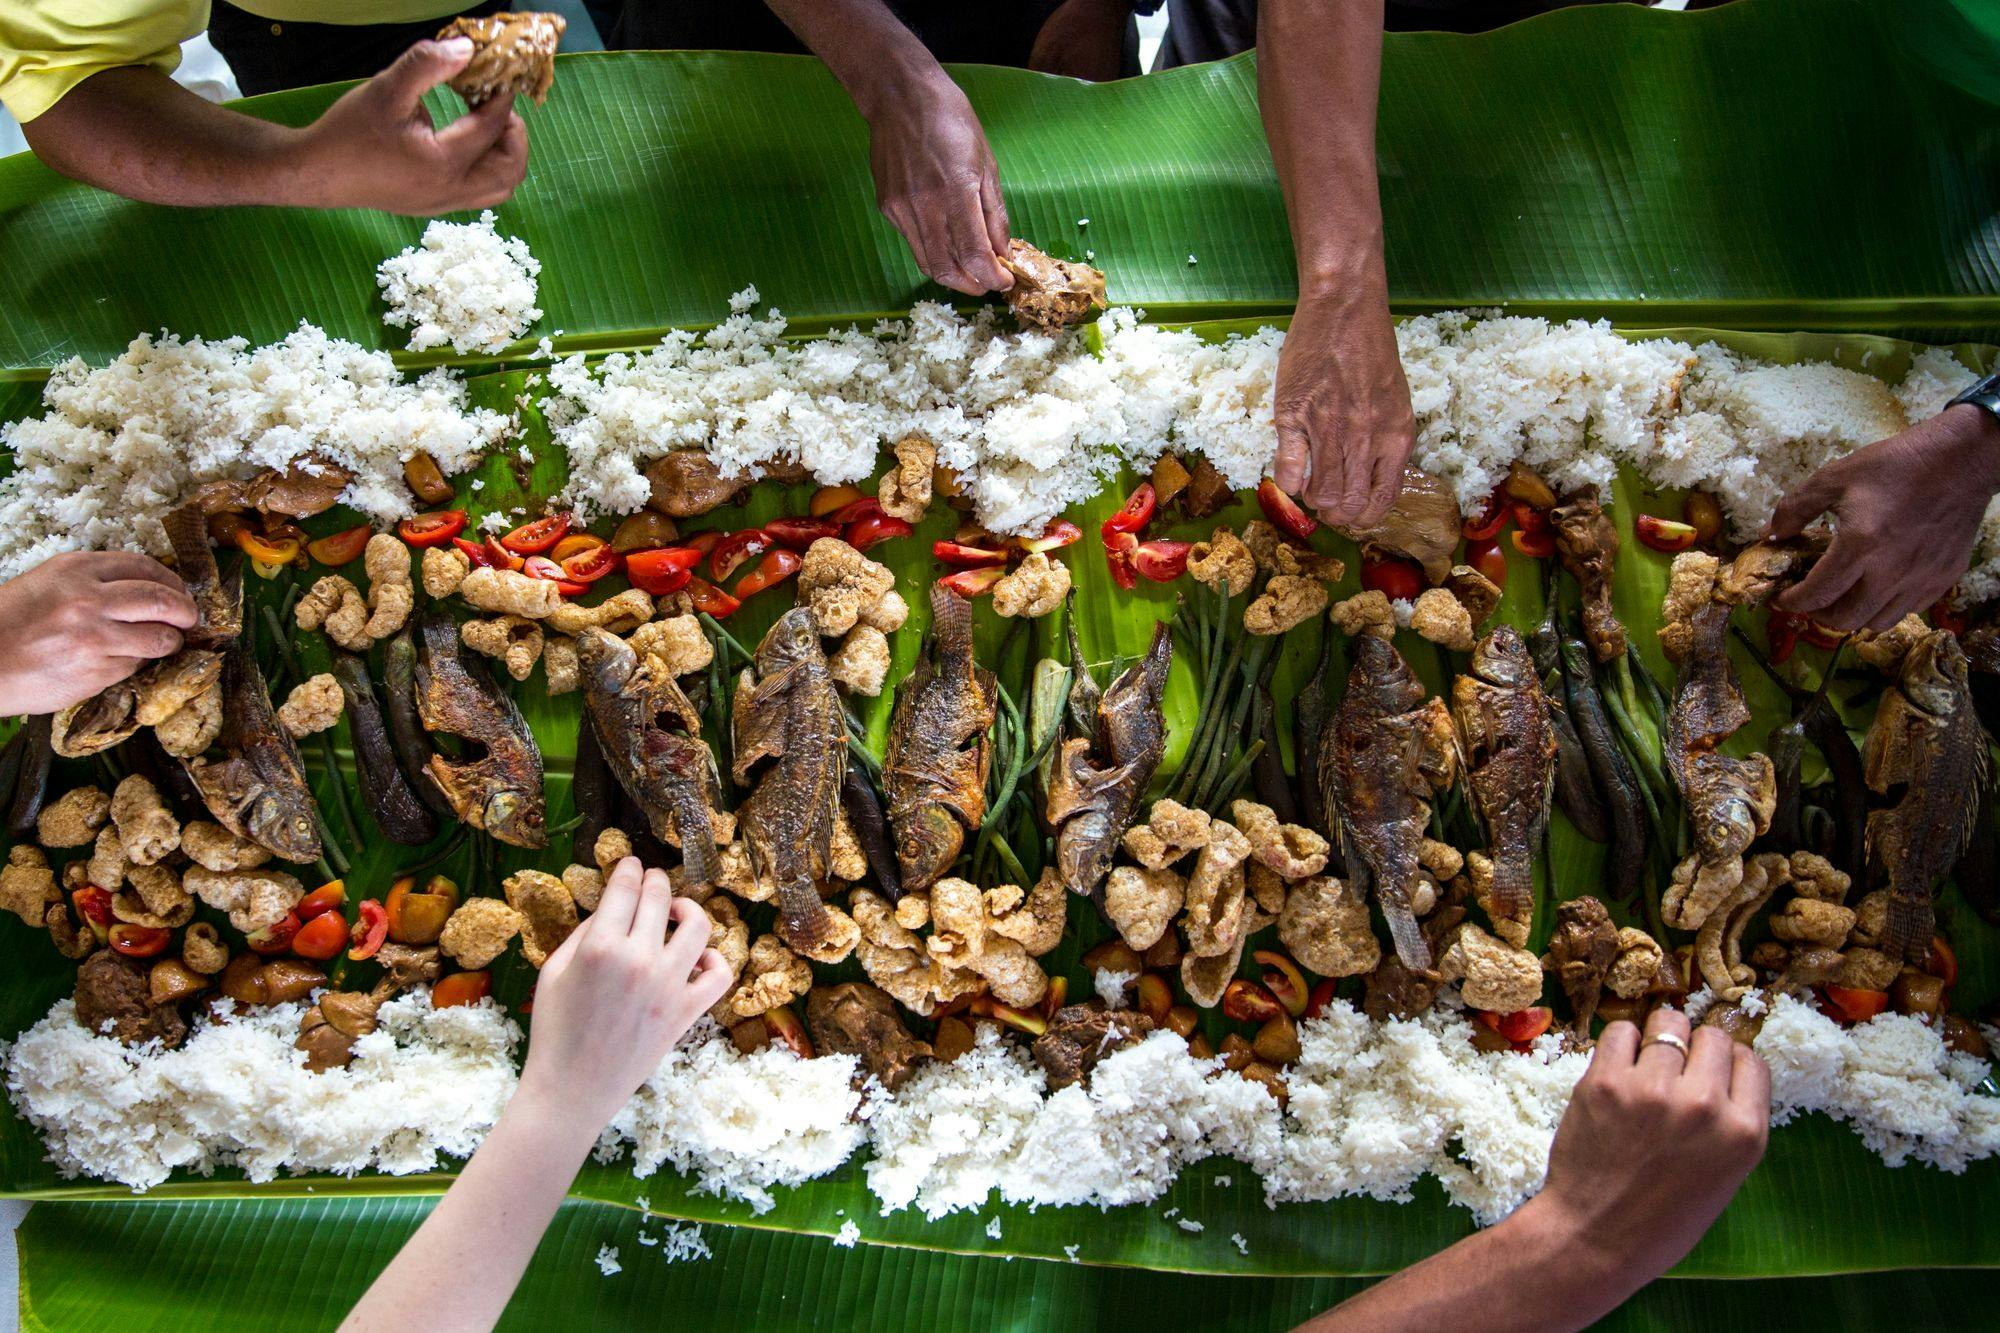 filipino-food-platter-hands-grabbing-food